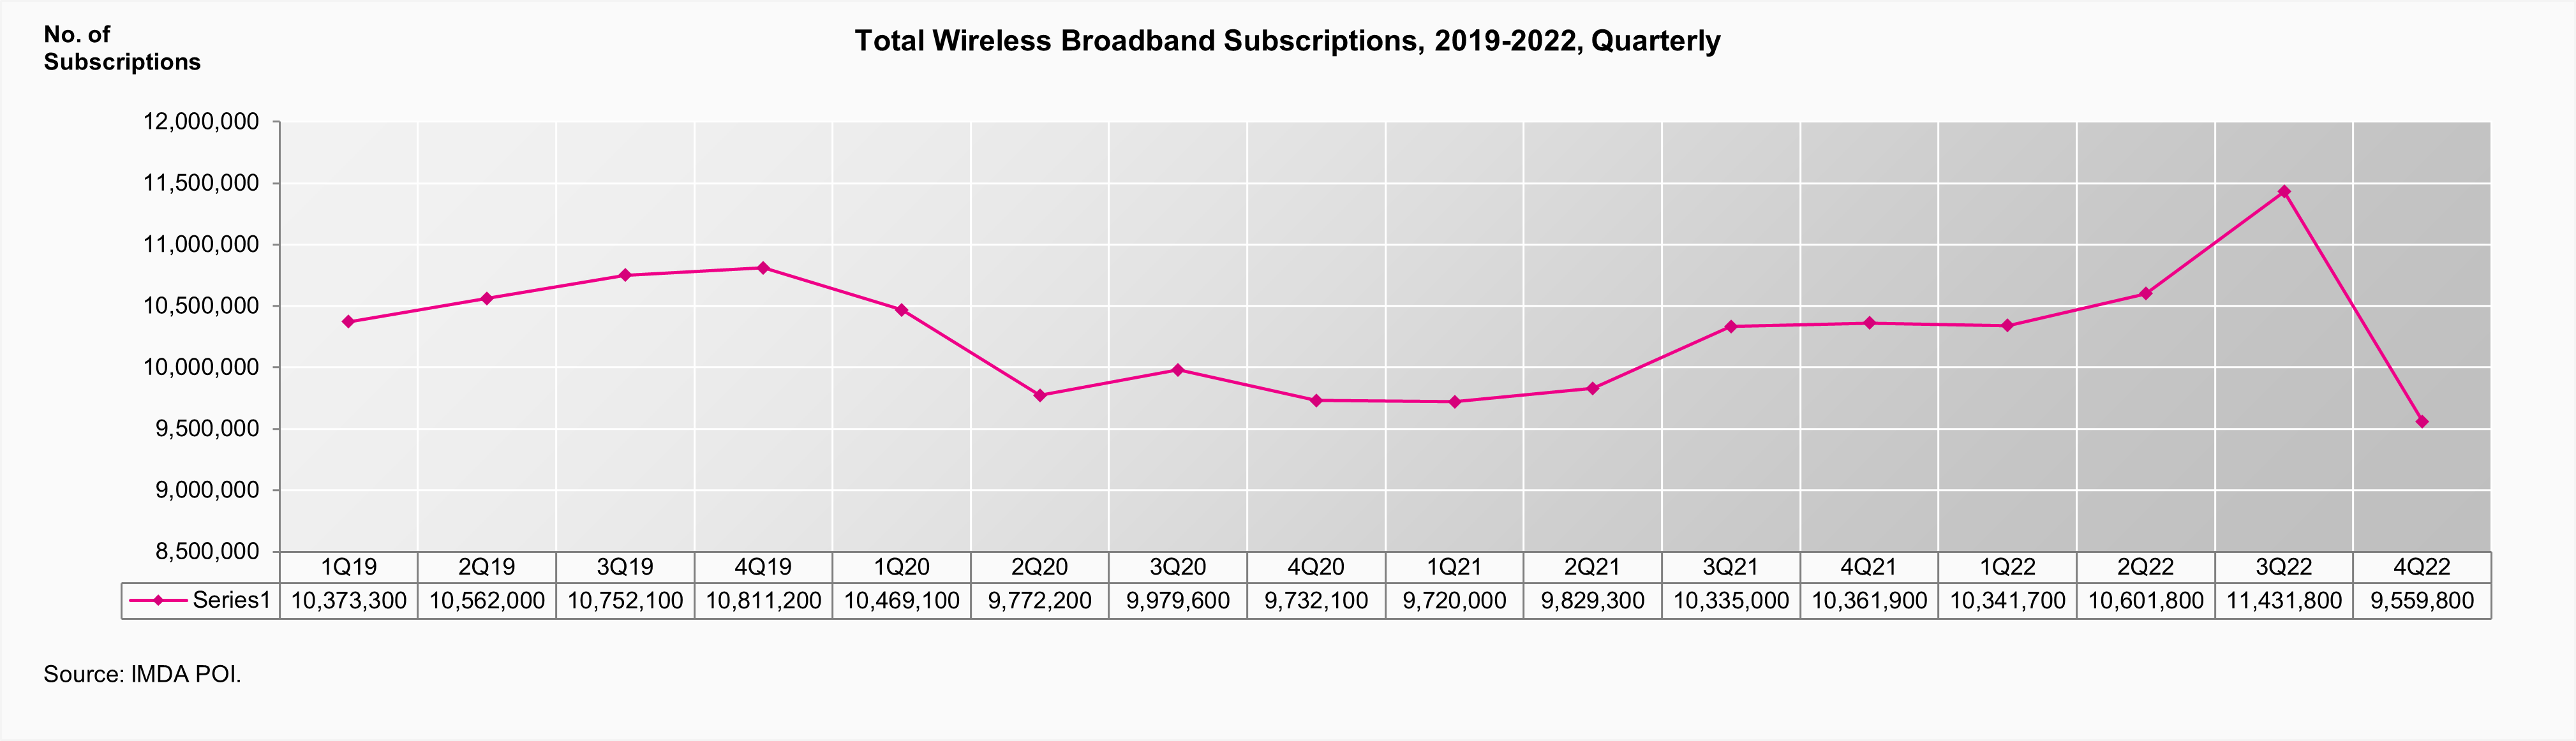 Total Wireless Broadband Subscriptions, 2019-2022, Quarterly